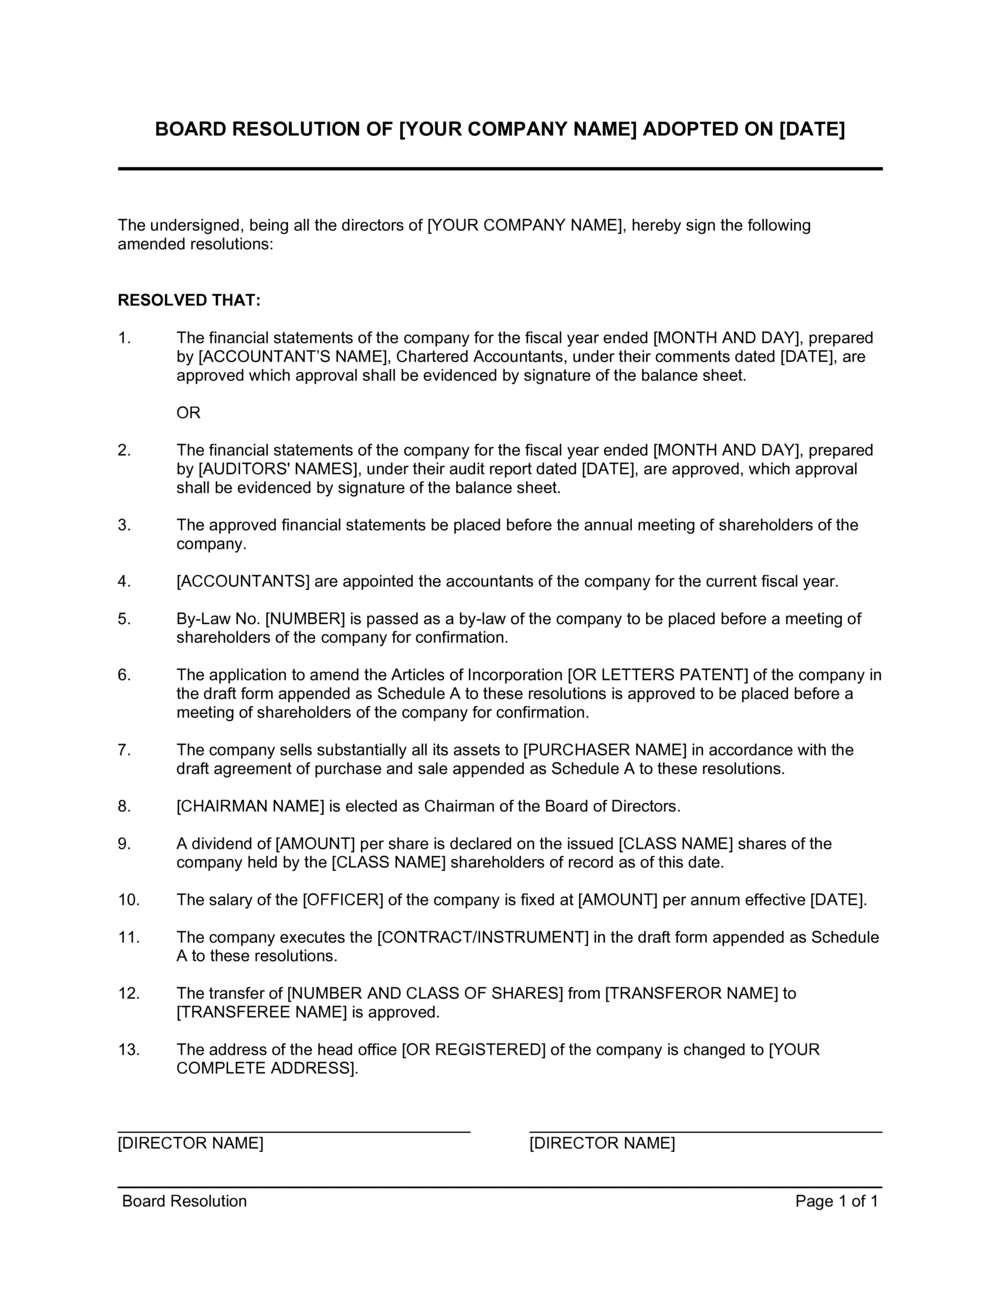 Sample Board Resolution Document